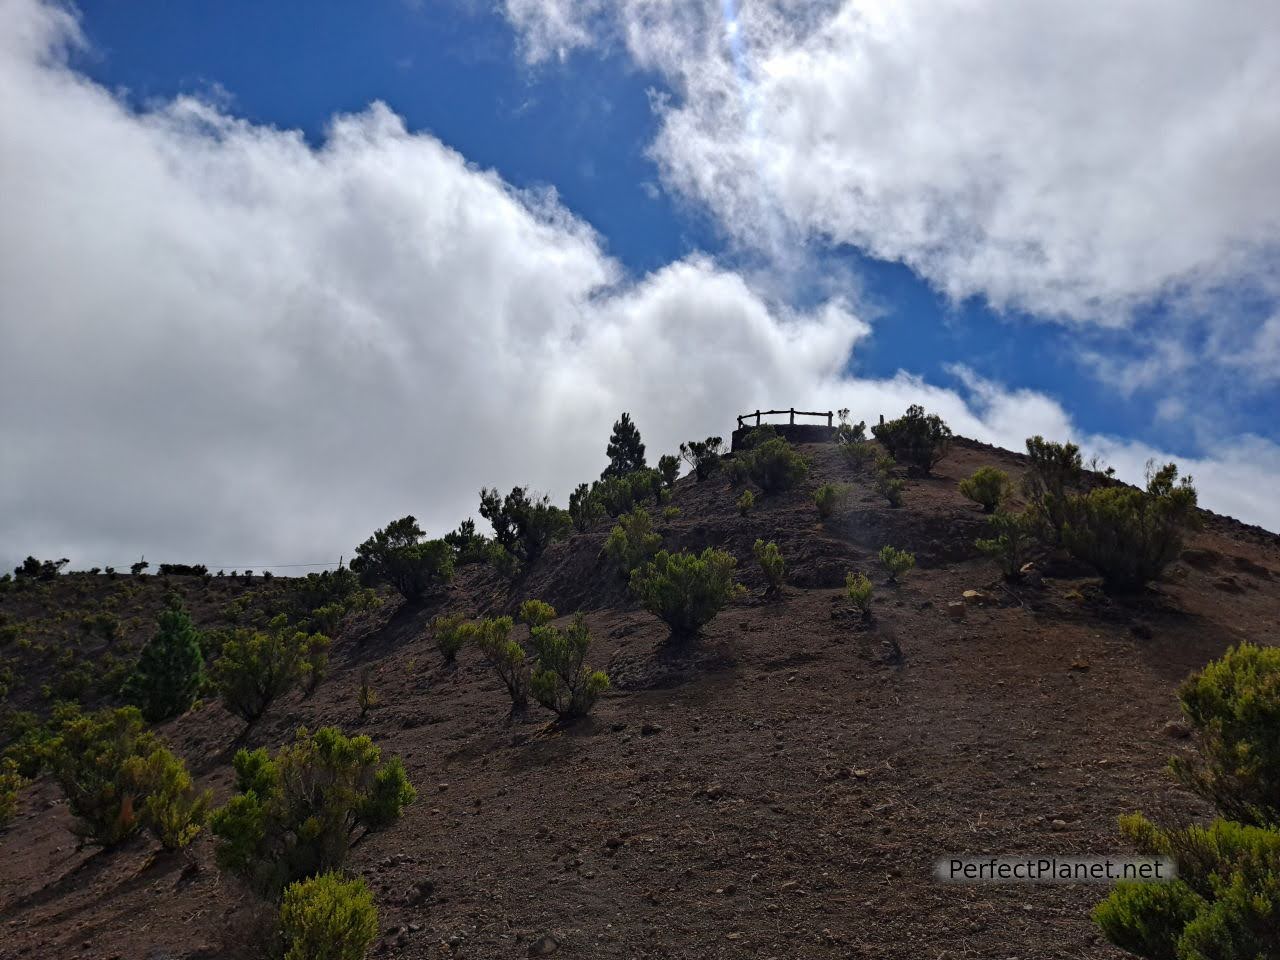 Hoya de Fireba viewpoint